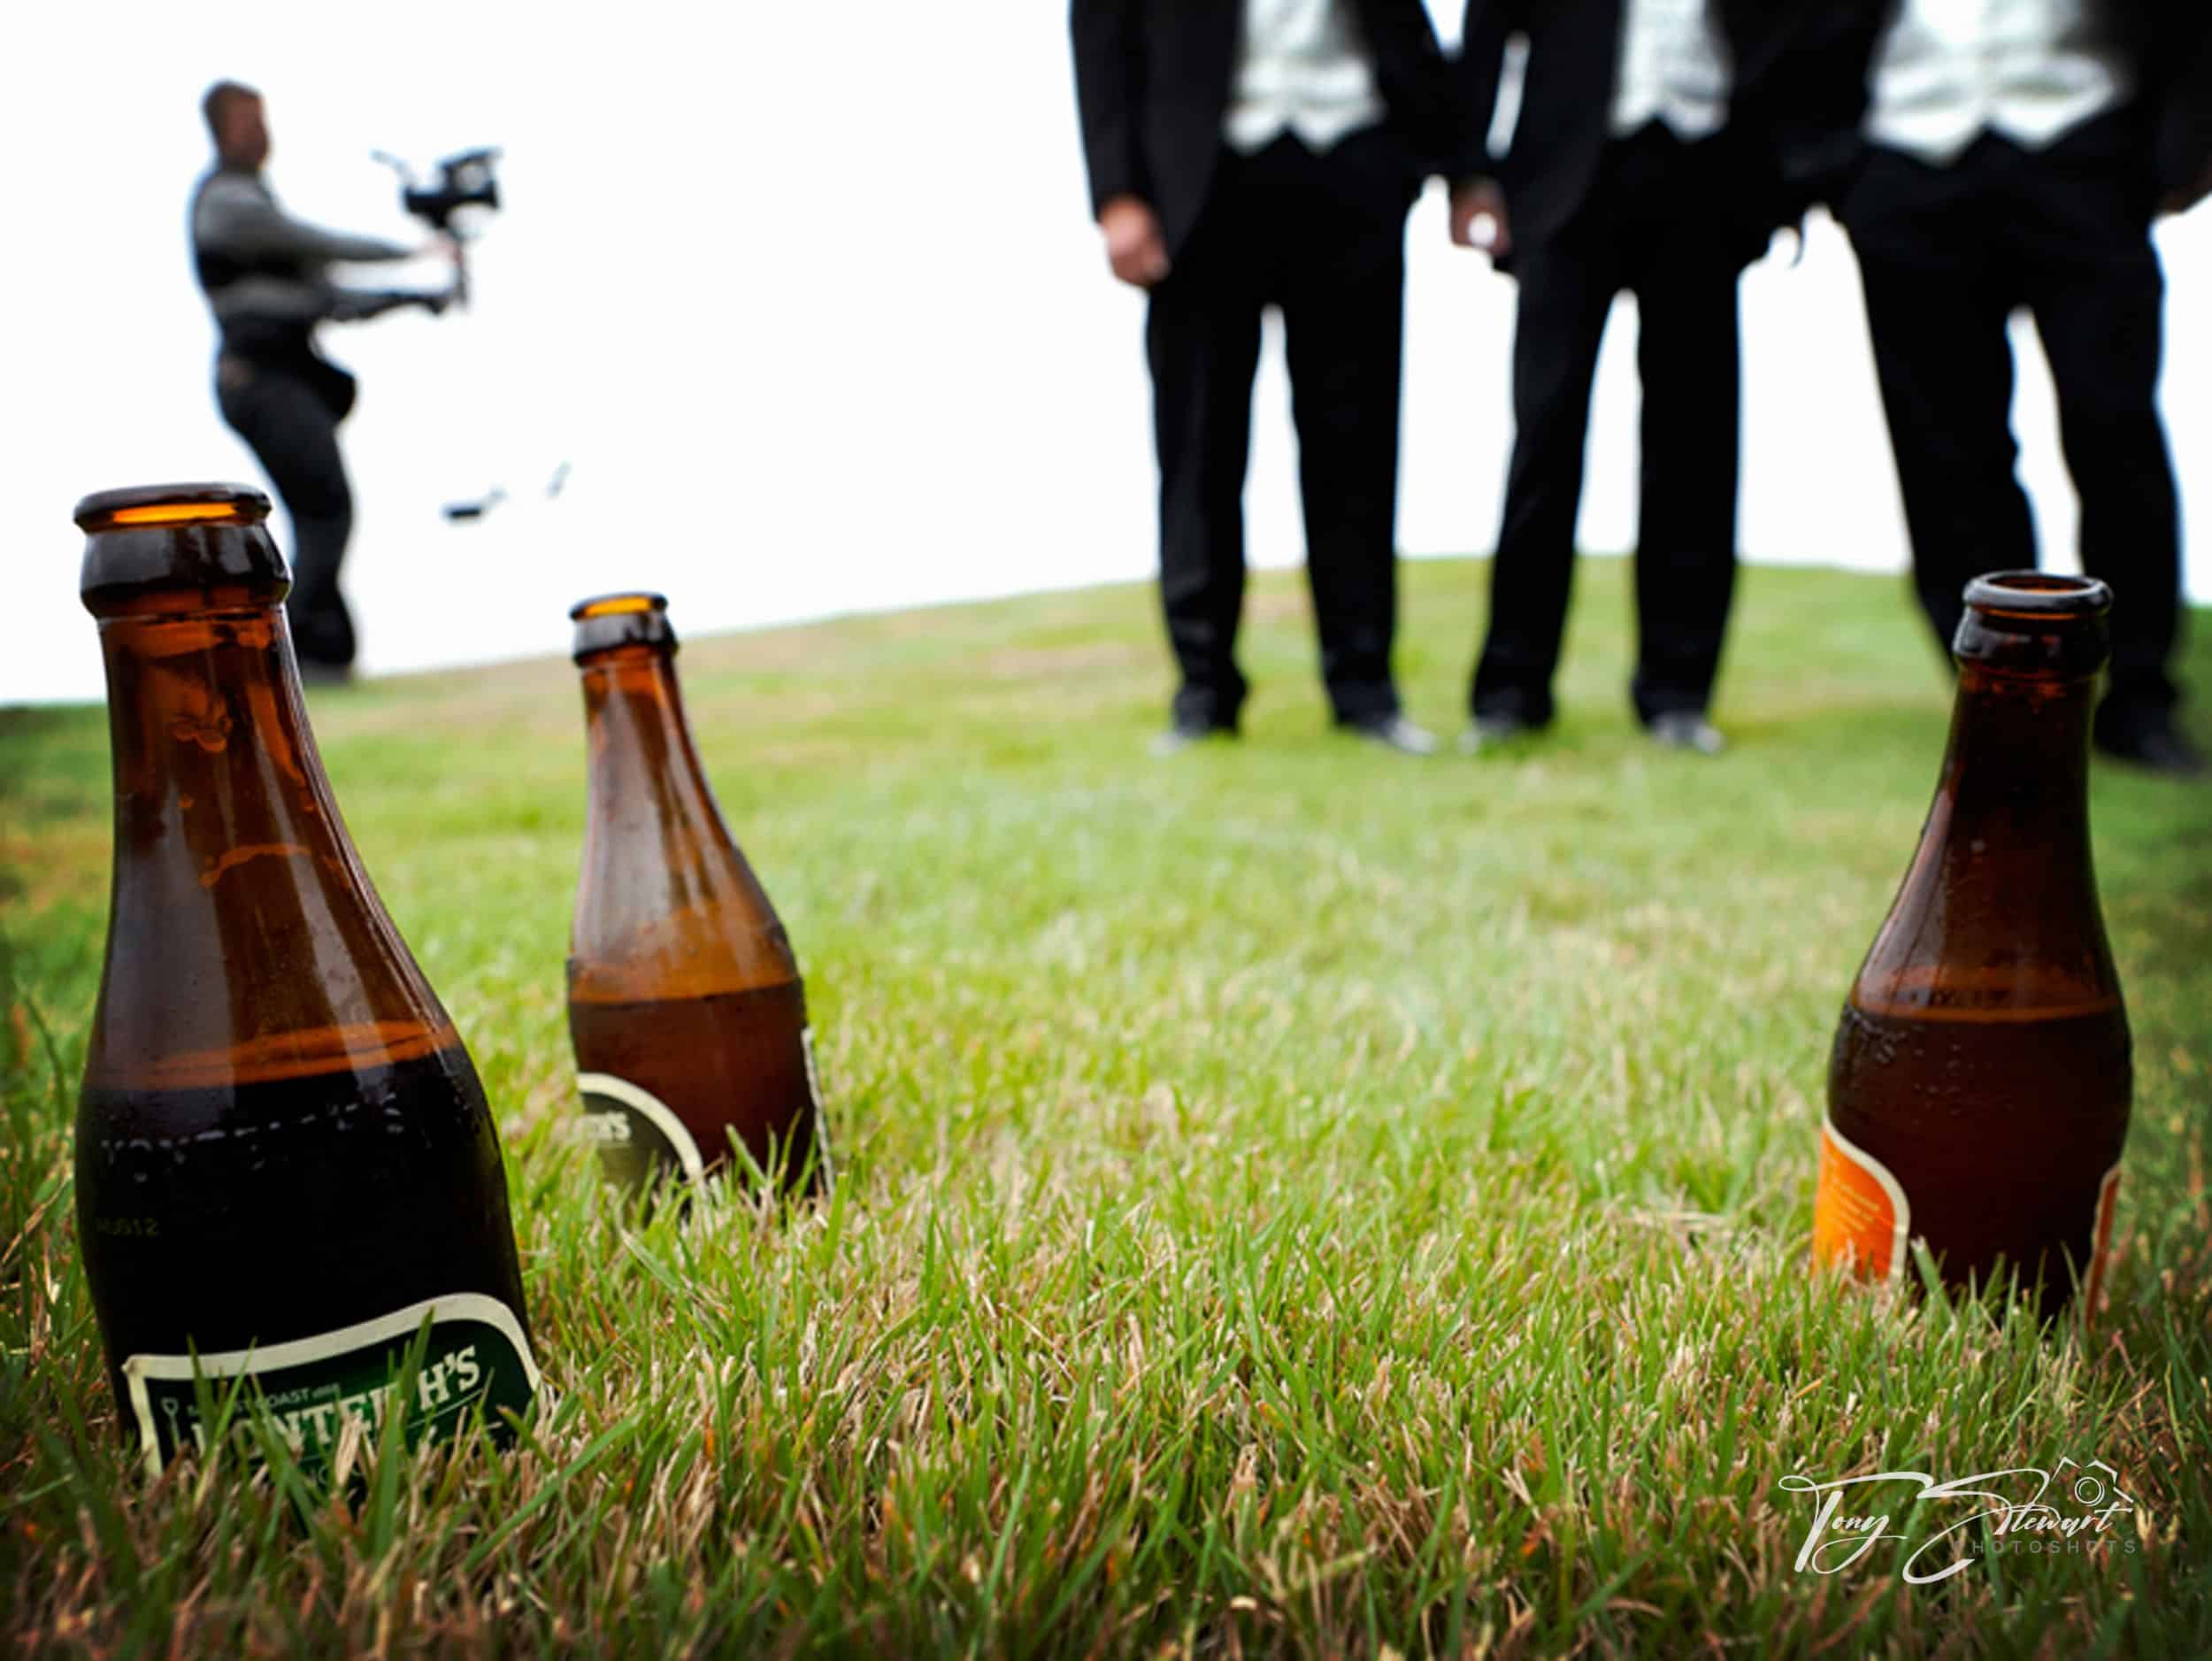 Videographer behind three beer bottles films three groomsmen at Clearwater Resort, Christchurch.